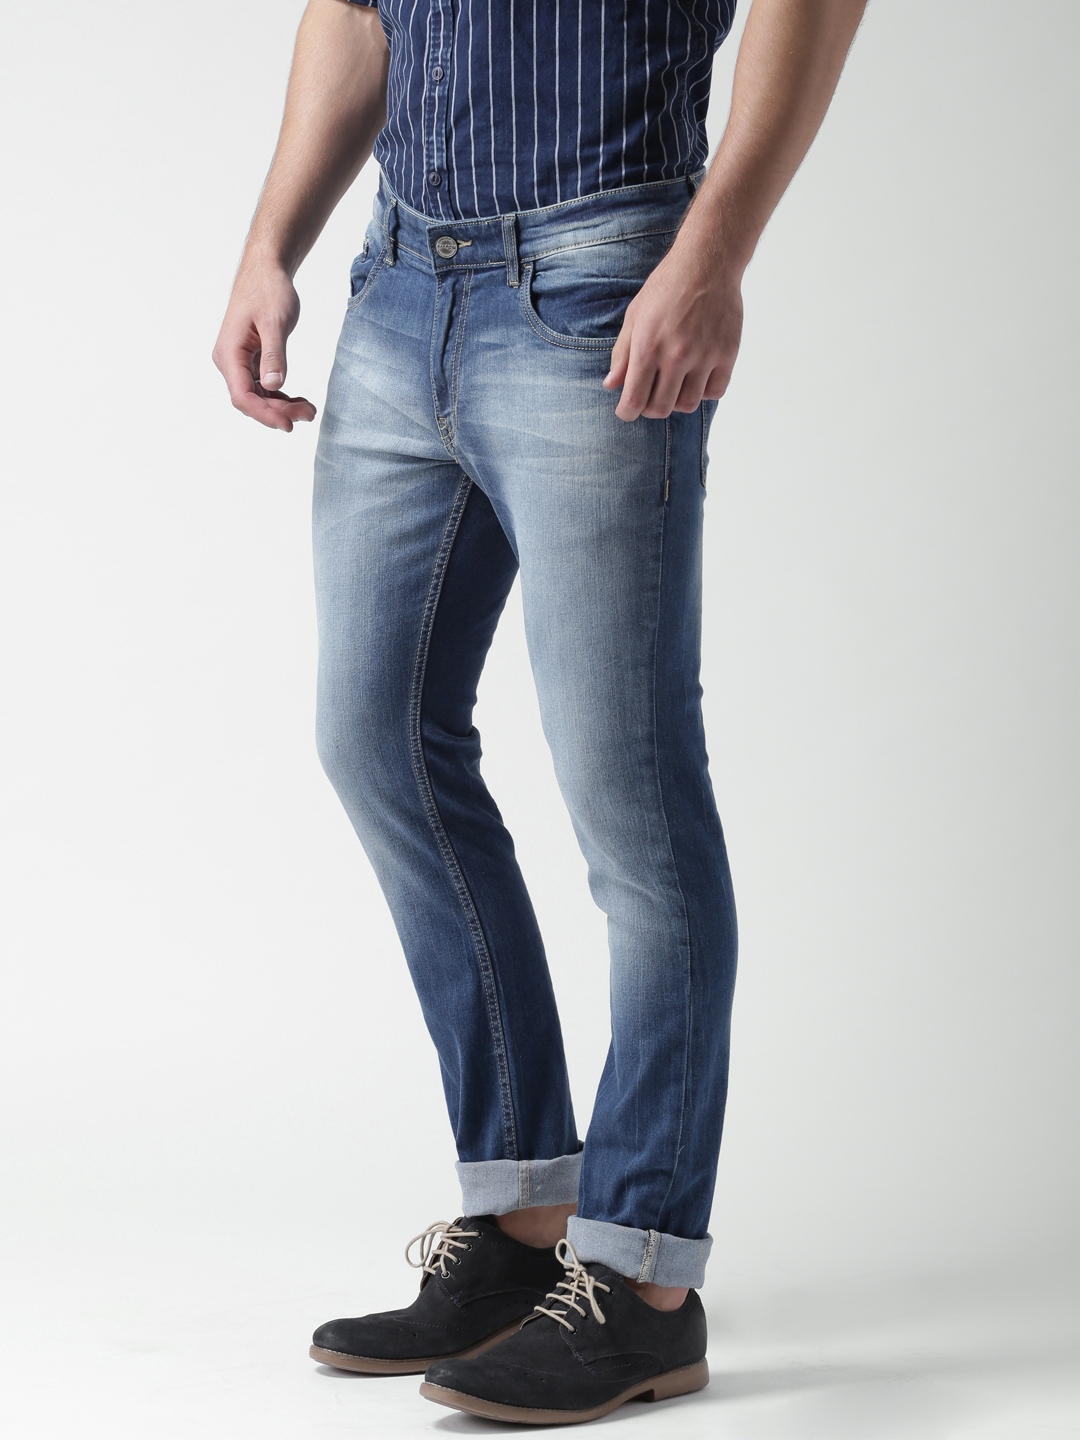 Buy Mast & Harbour Blue Skinny Fit Jeans - Jeans for Men 1275802 | Myntra